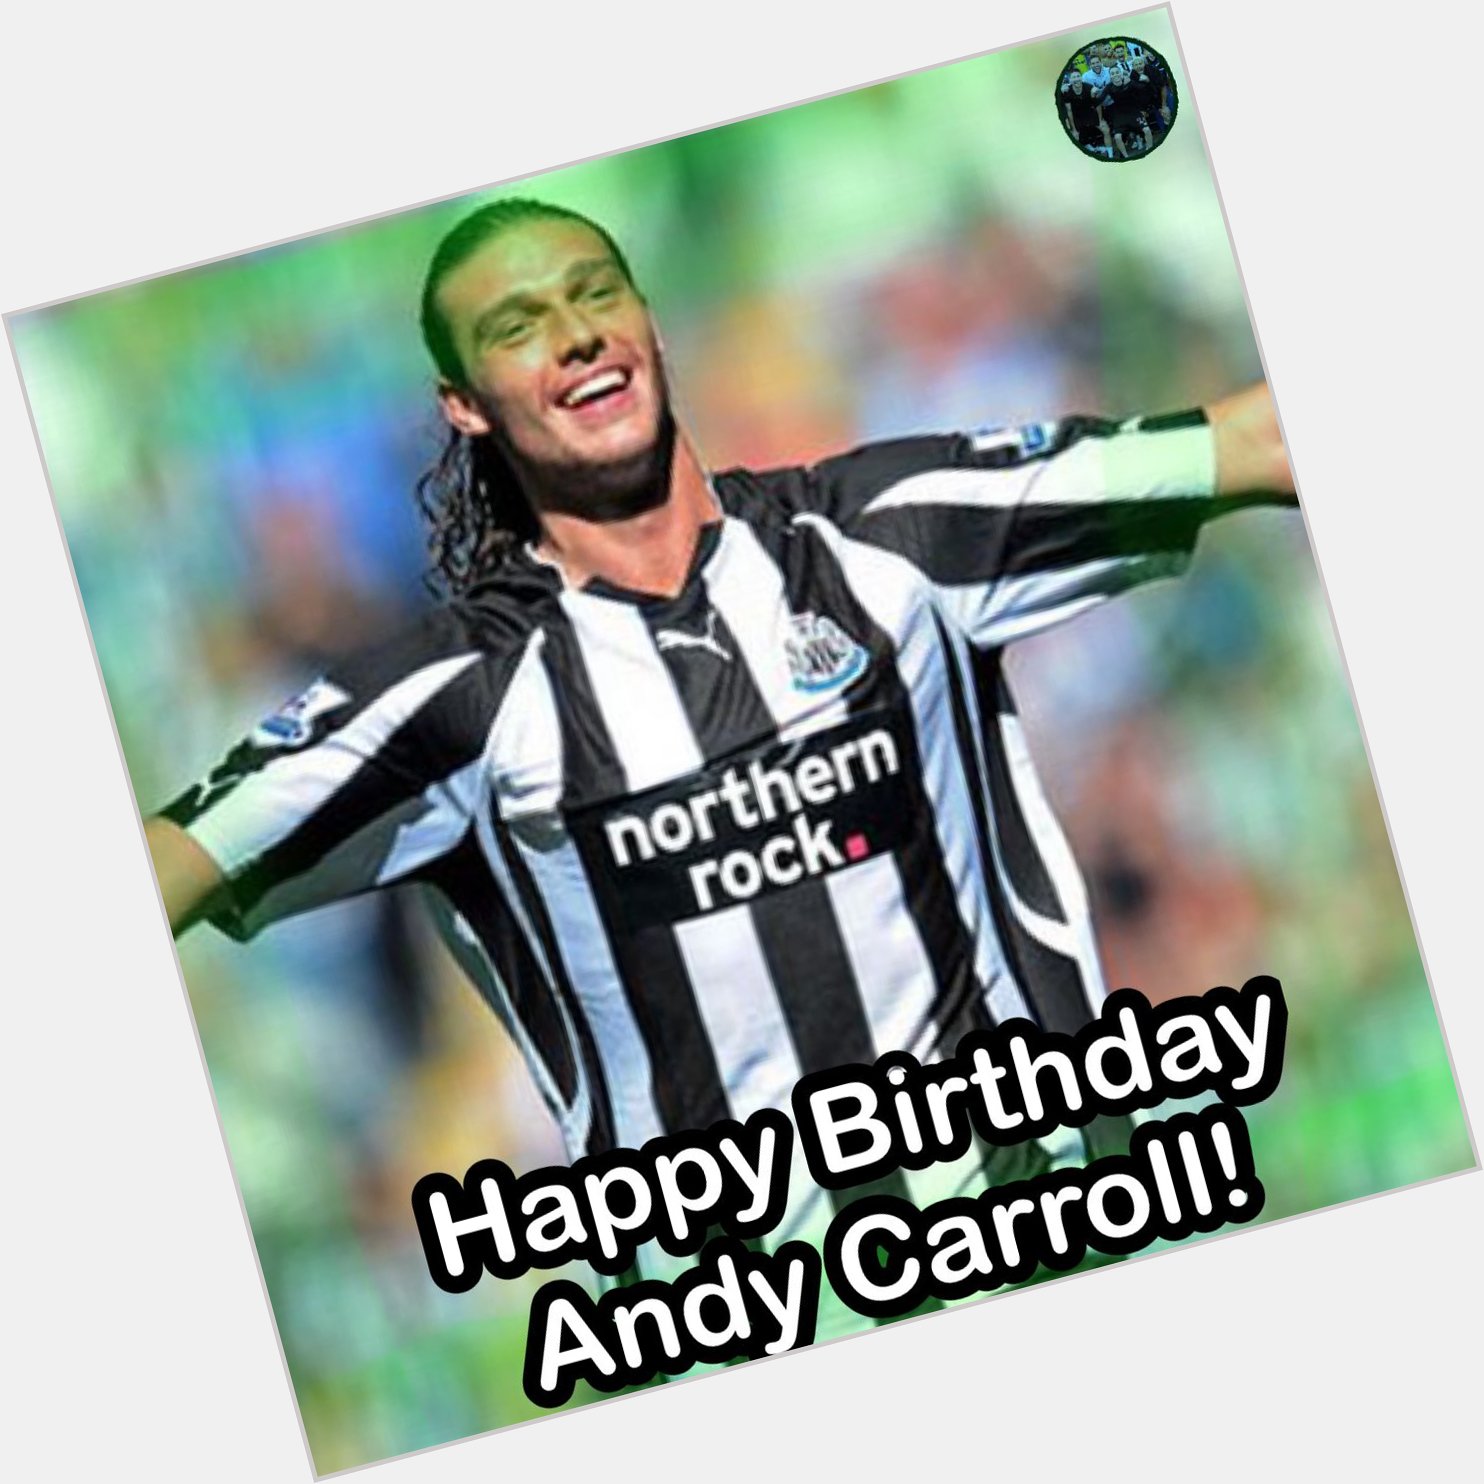 Happy Birthday Andy Carroll!  